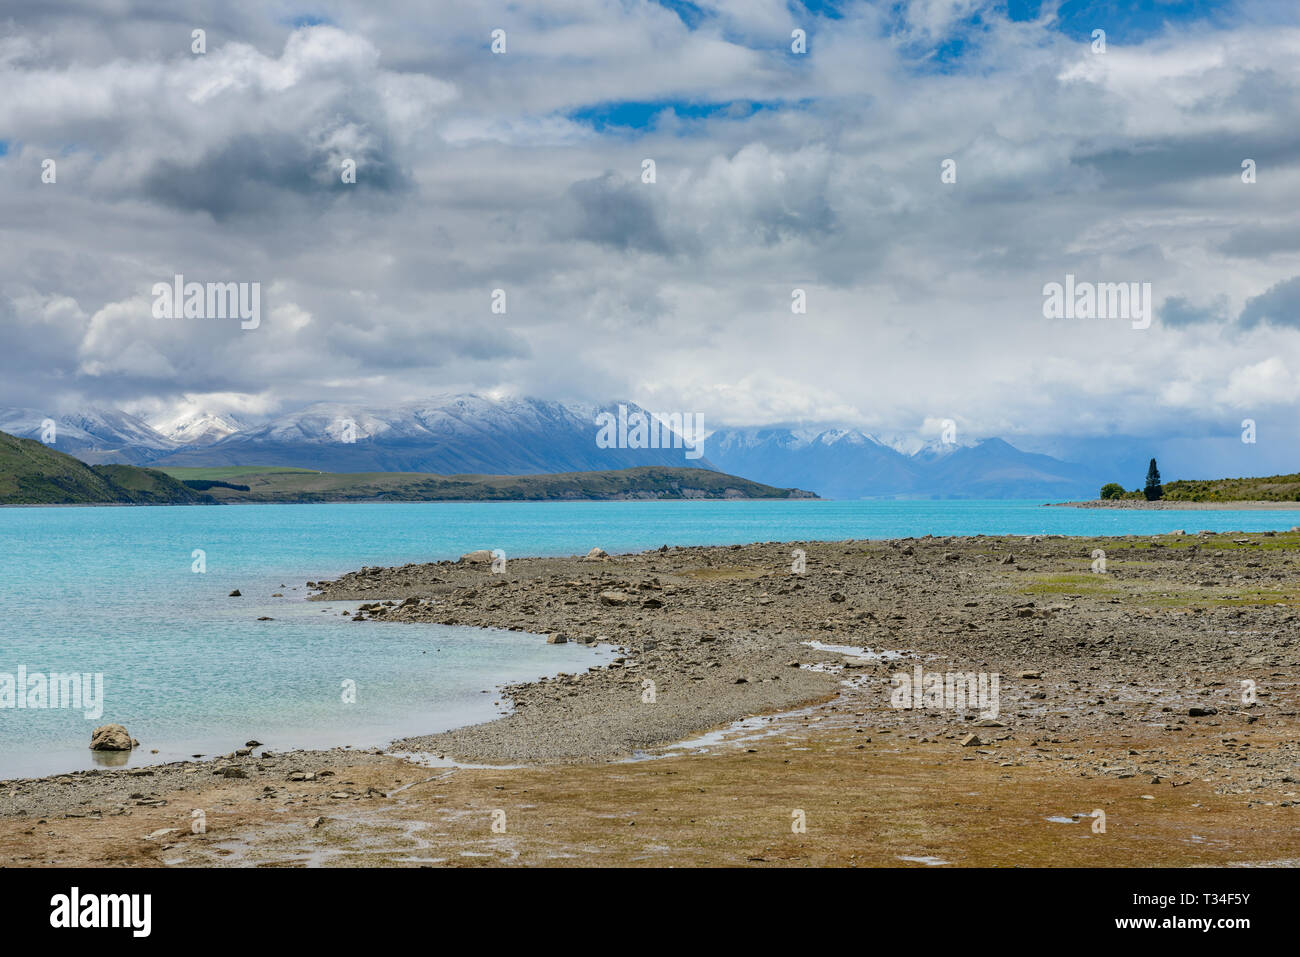 Beeindruckend Wasser Farbe und Berglandschaft am Lake Tekapo, Neuseeland Stockfoto